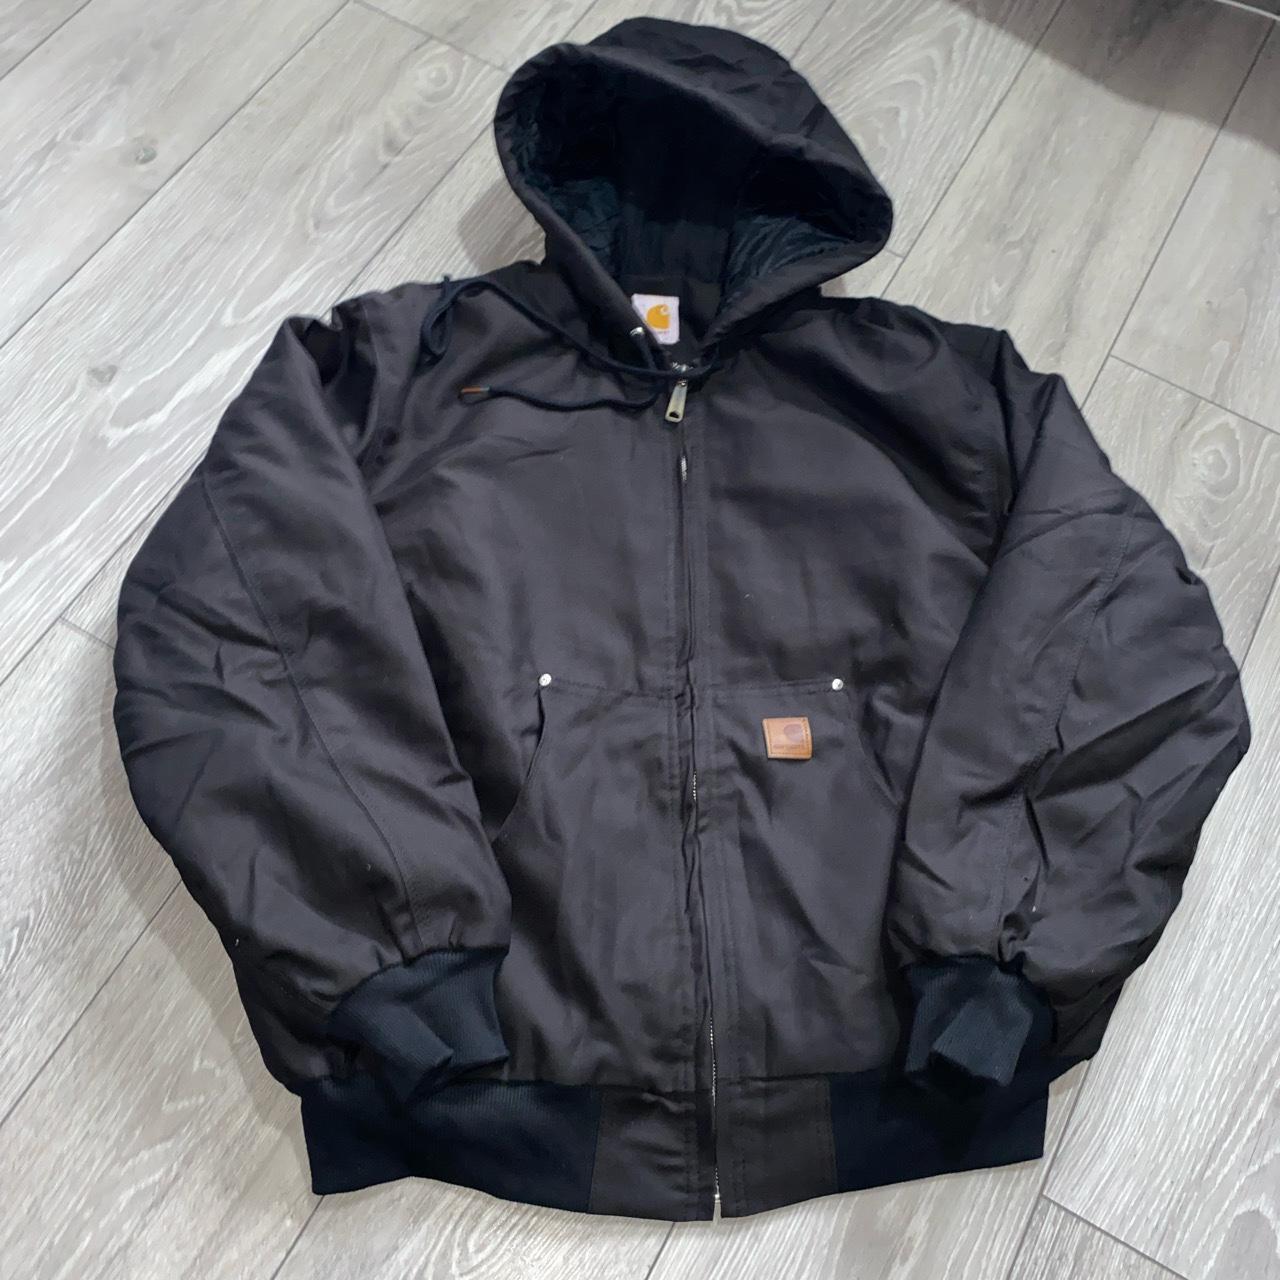 Rework Hooded Carhartt Jacket black •Premium... - Depop